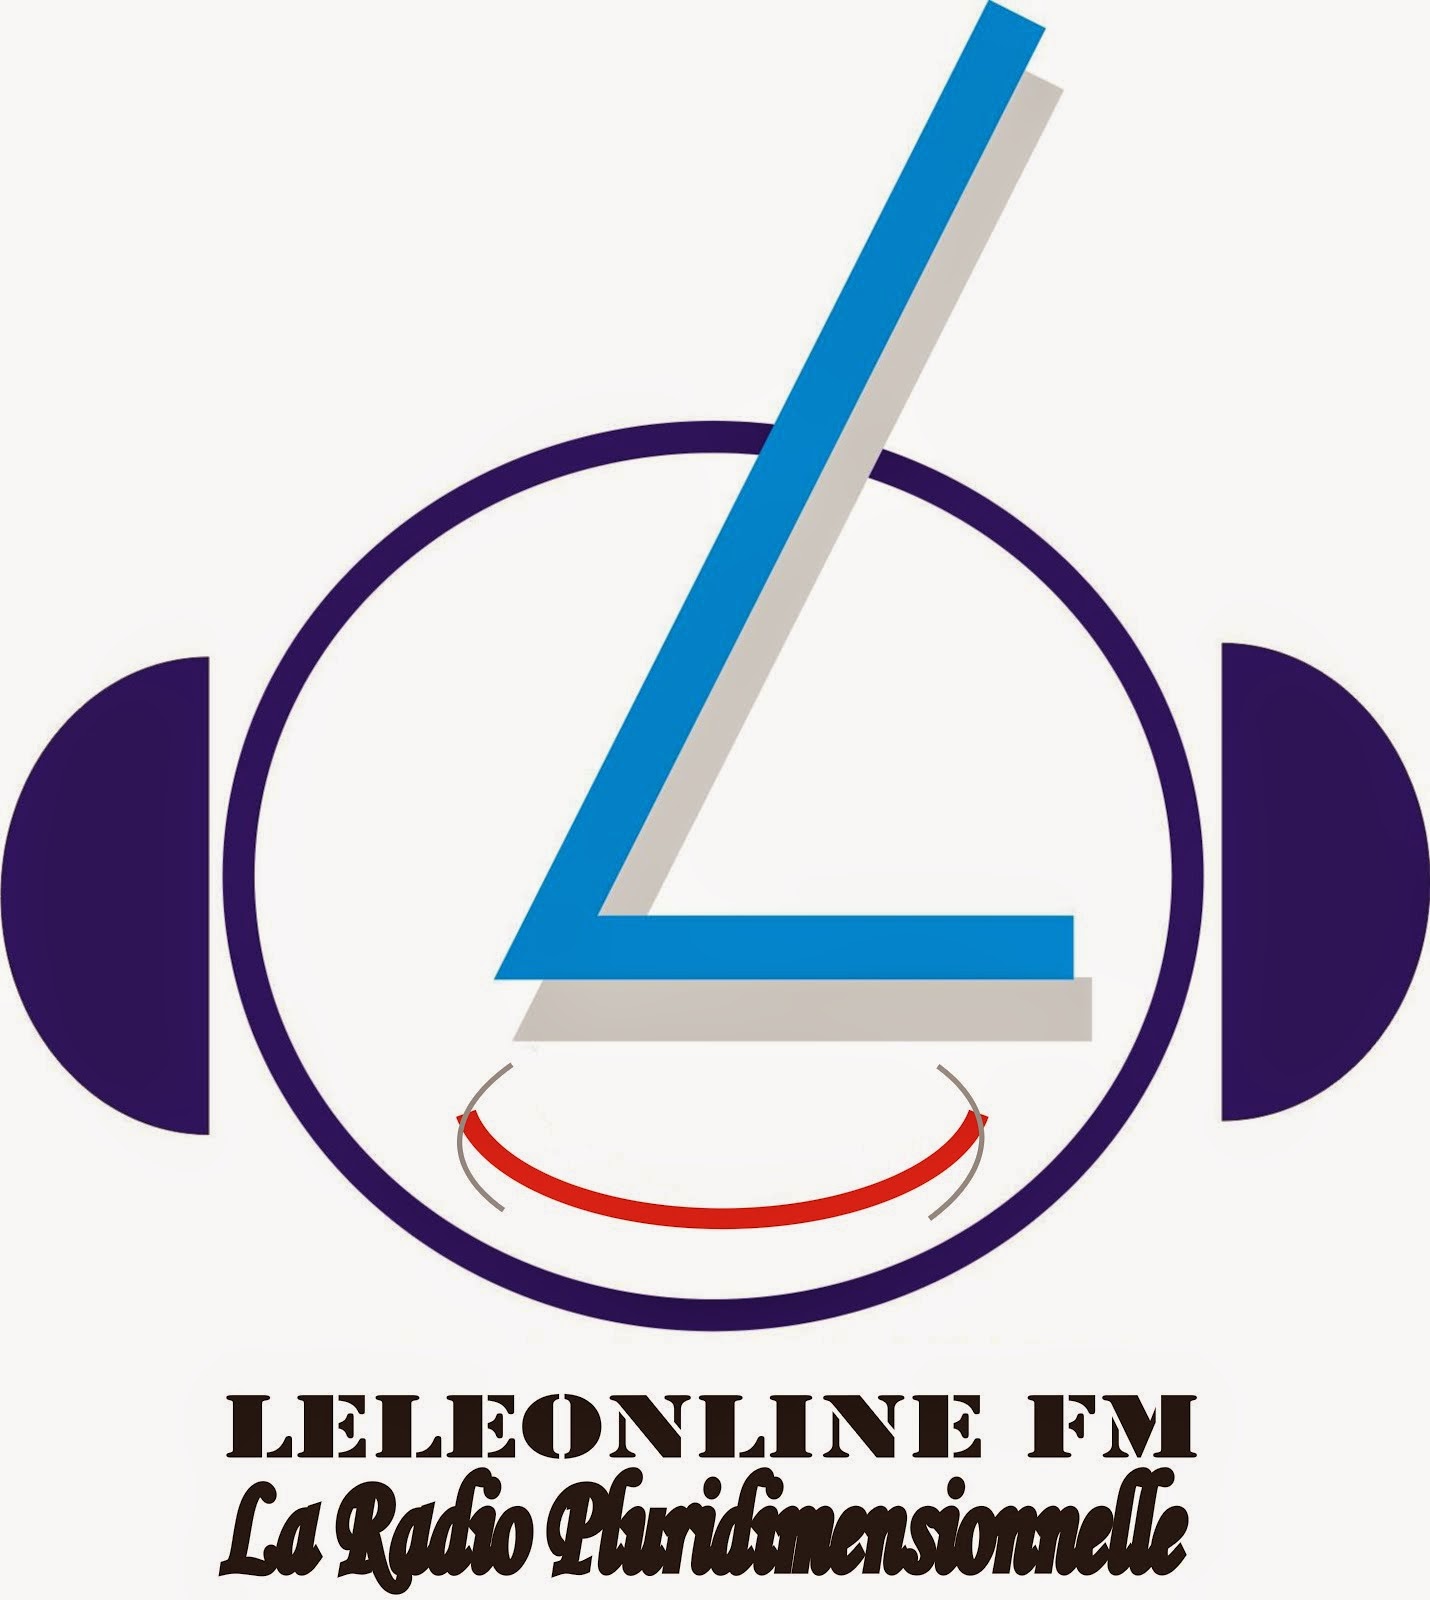 Radio Leleonline fm